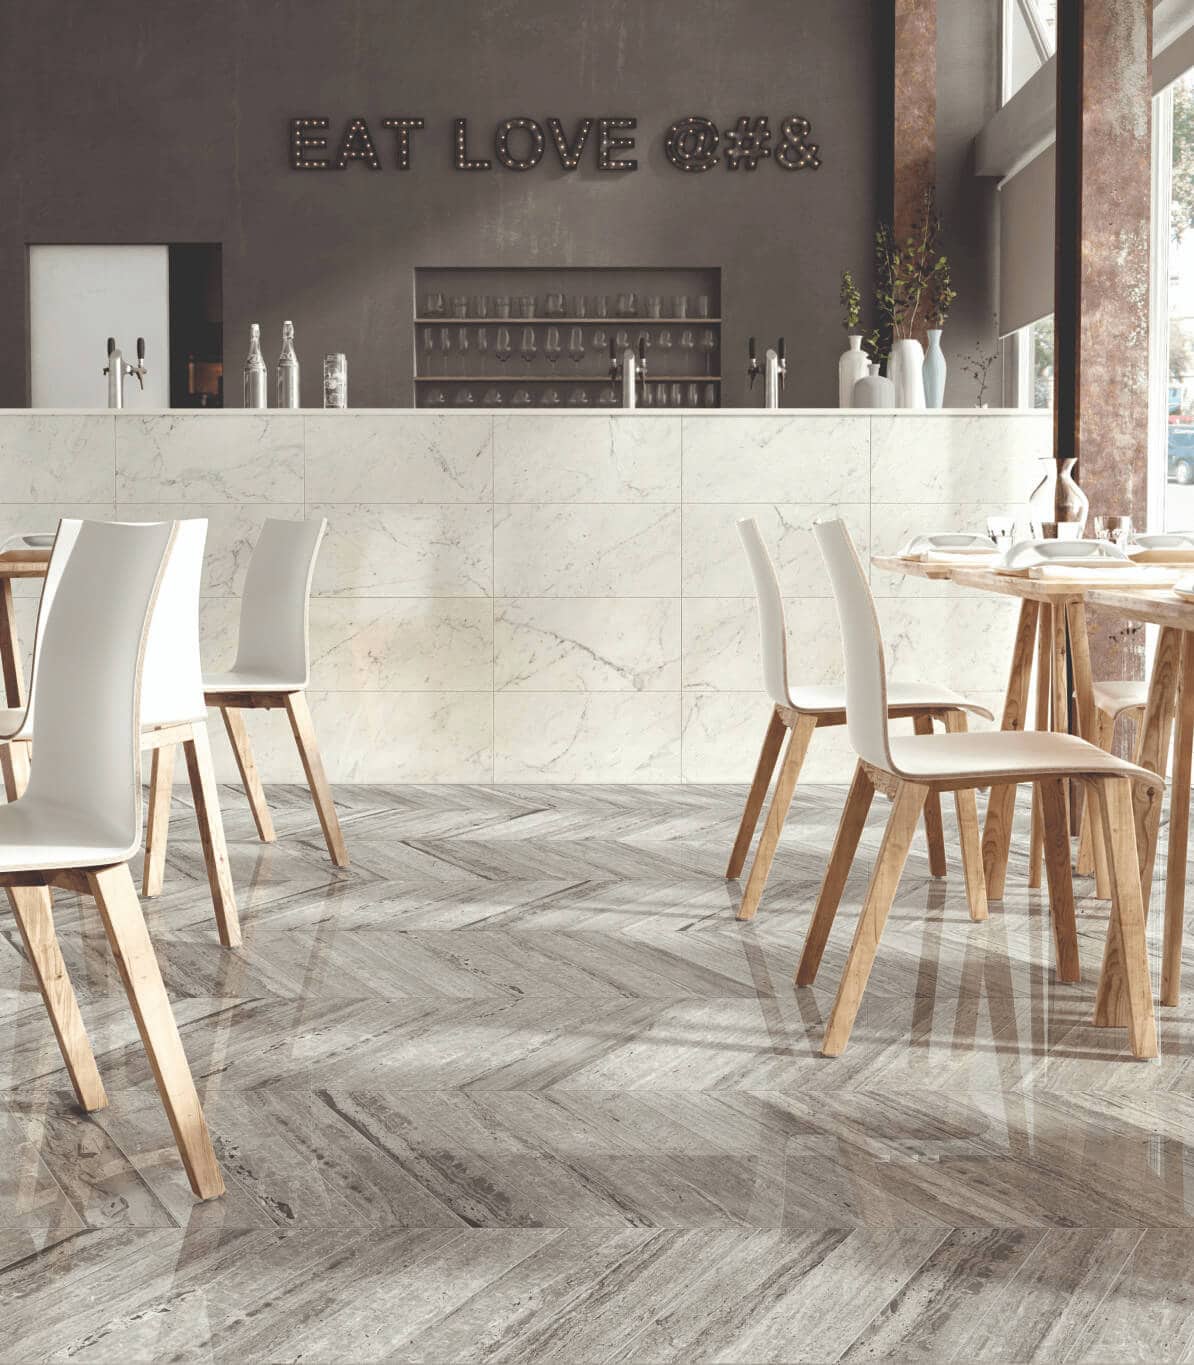 Restaurant interior with chevron tile floor pattern